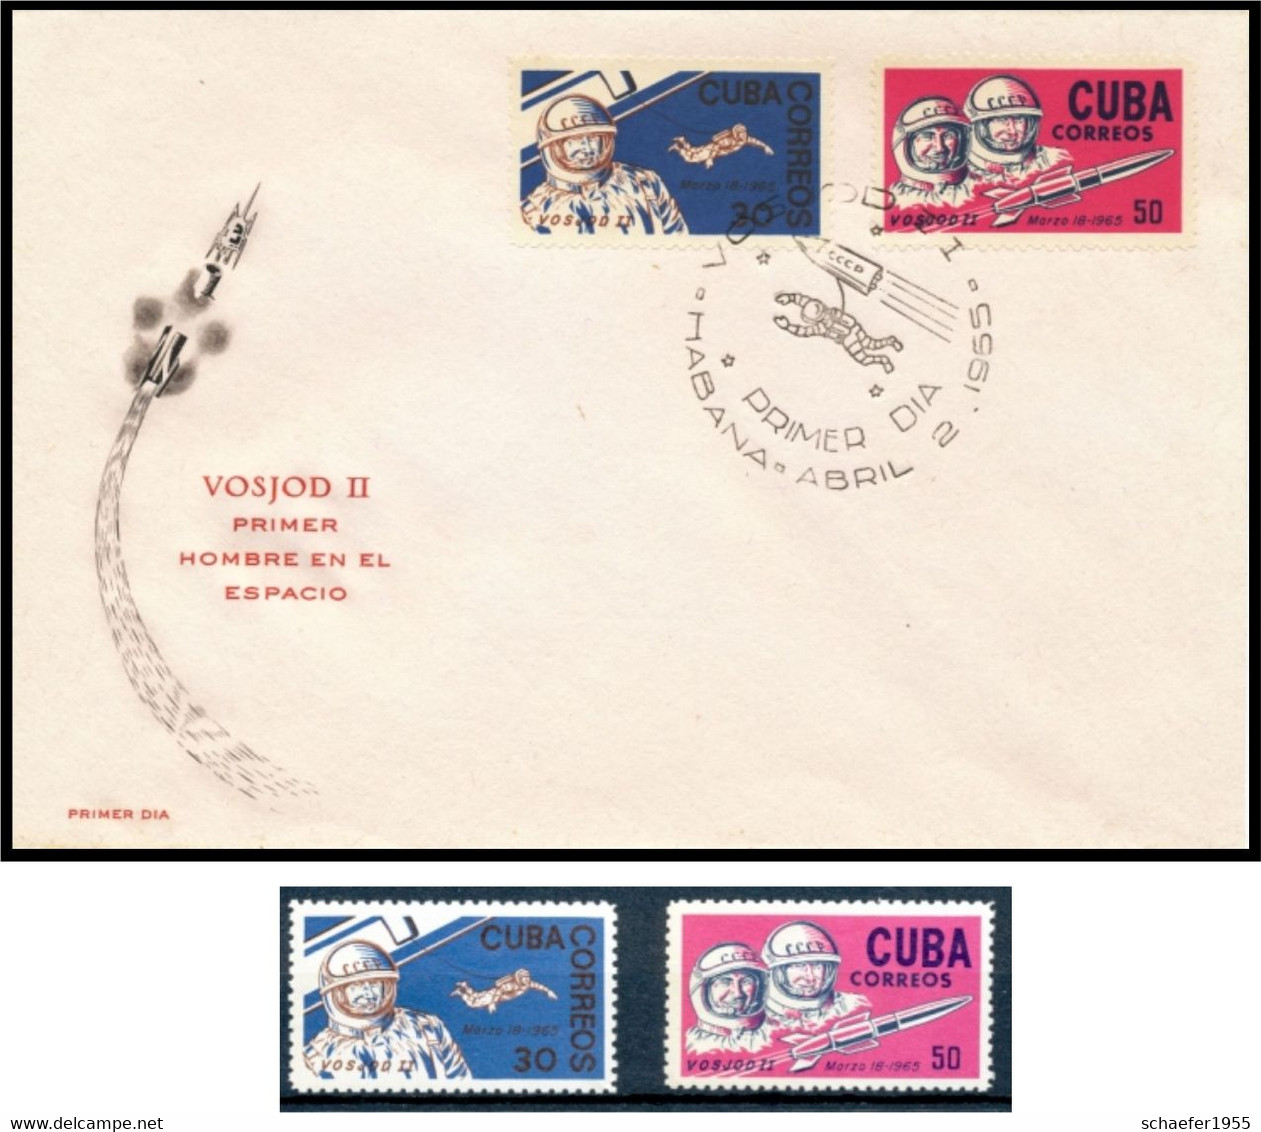 Cuba, Kuba 1965 FDC + Stamps VOSJOD II - North  America